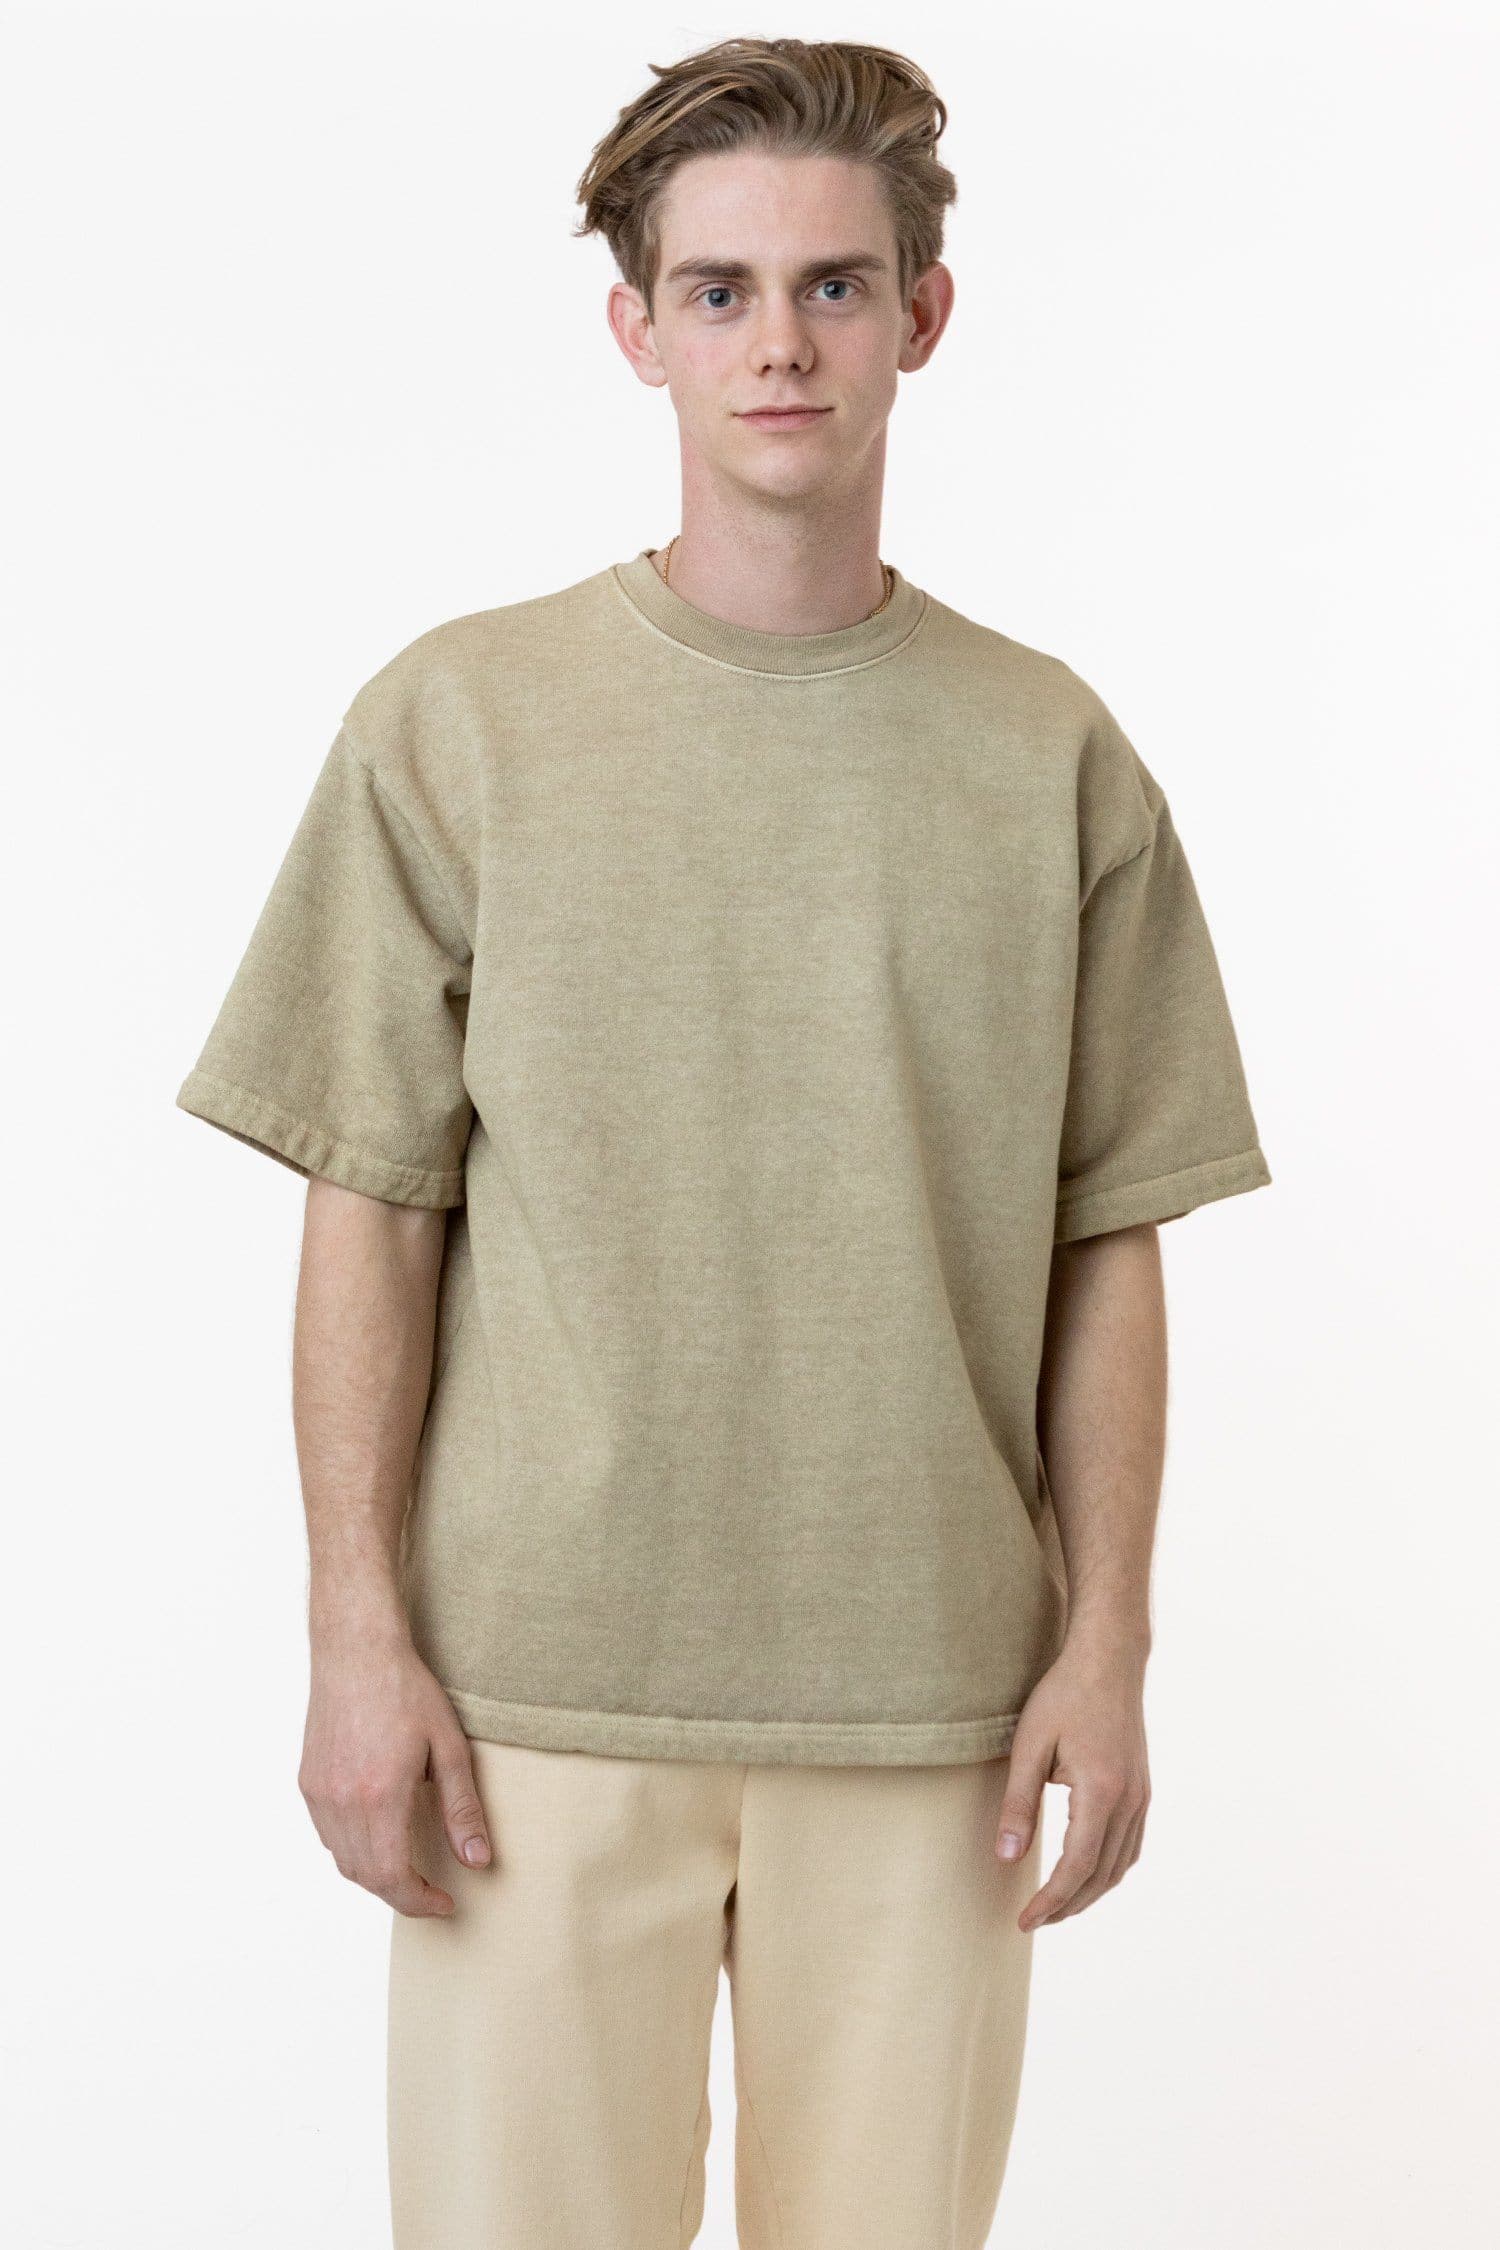 Gauvine Essential Long Sleeve Deep V-Neck T-Shirt 5004